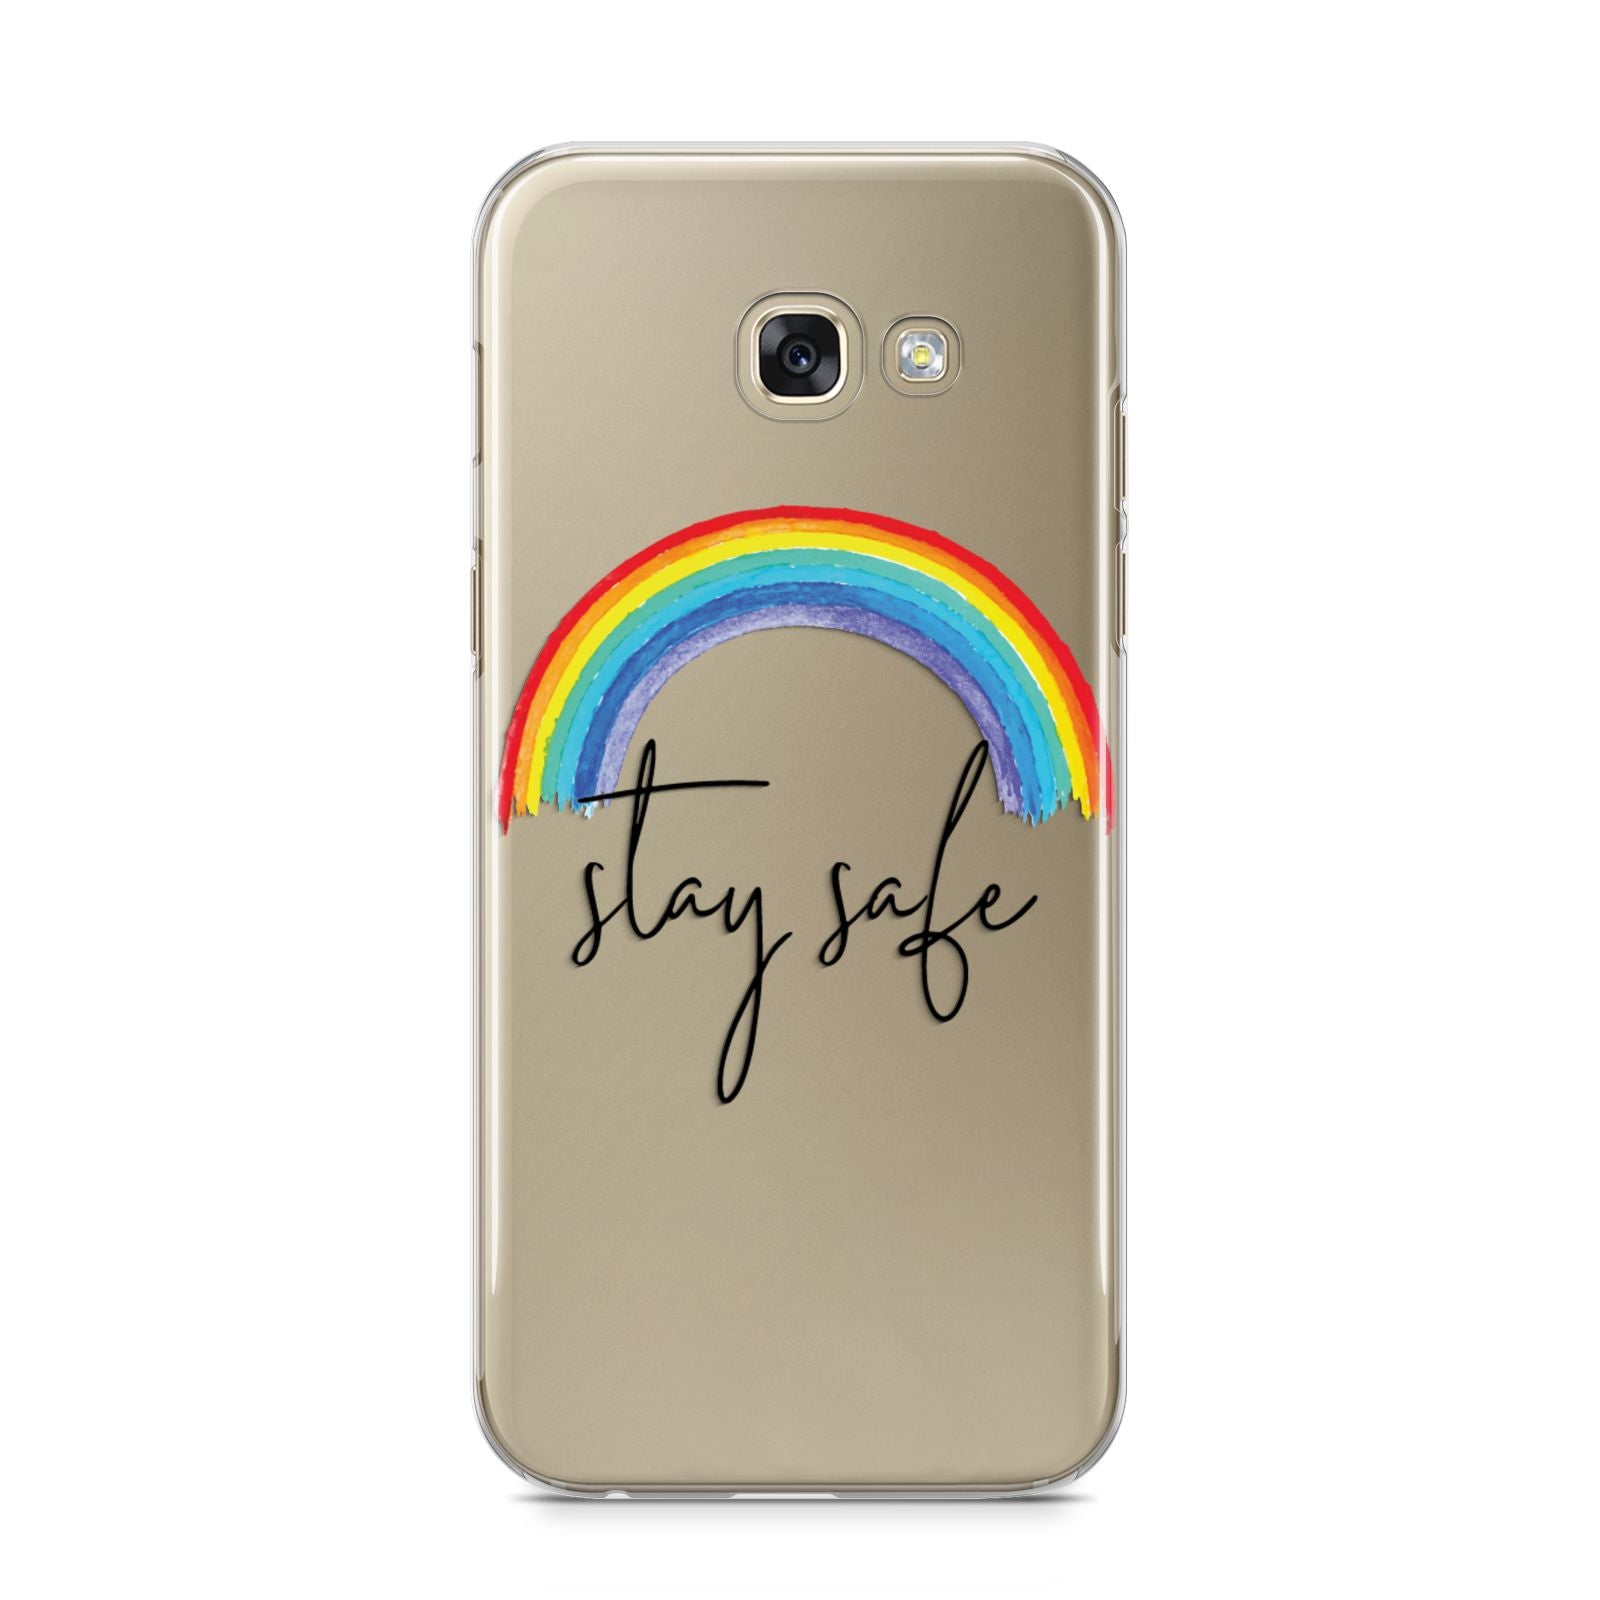 Stay Safe Rainbow Samsung Galaxy A5 2017 Case on gold phone